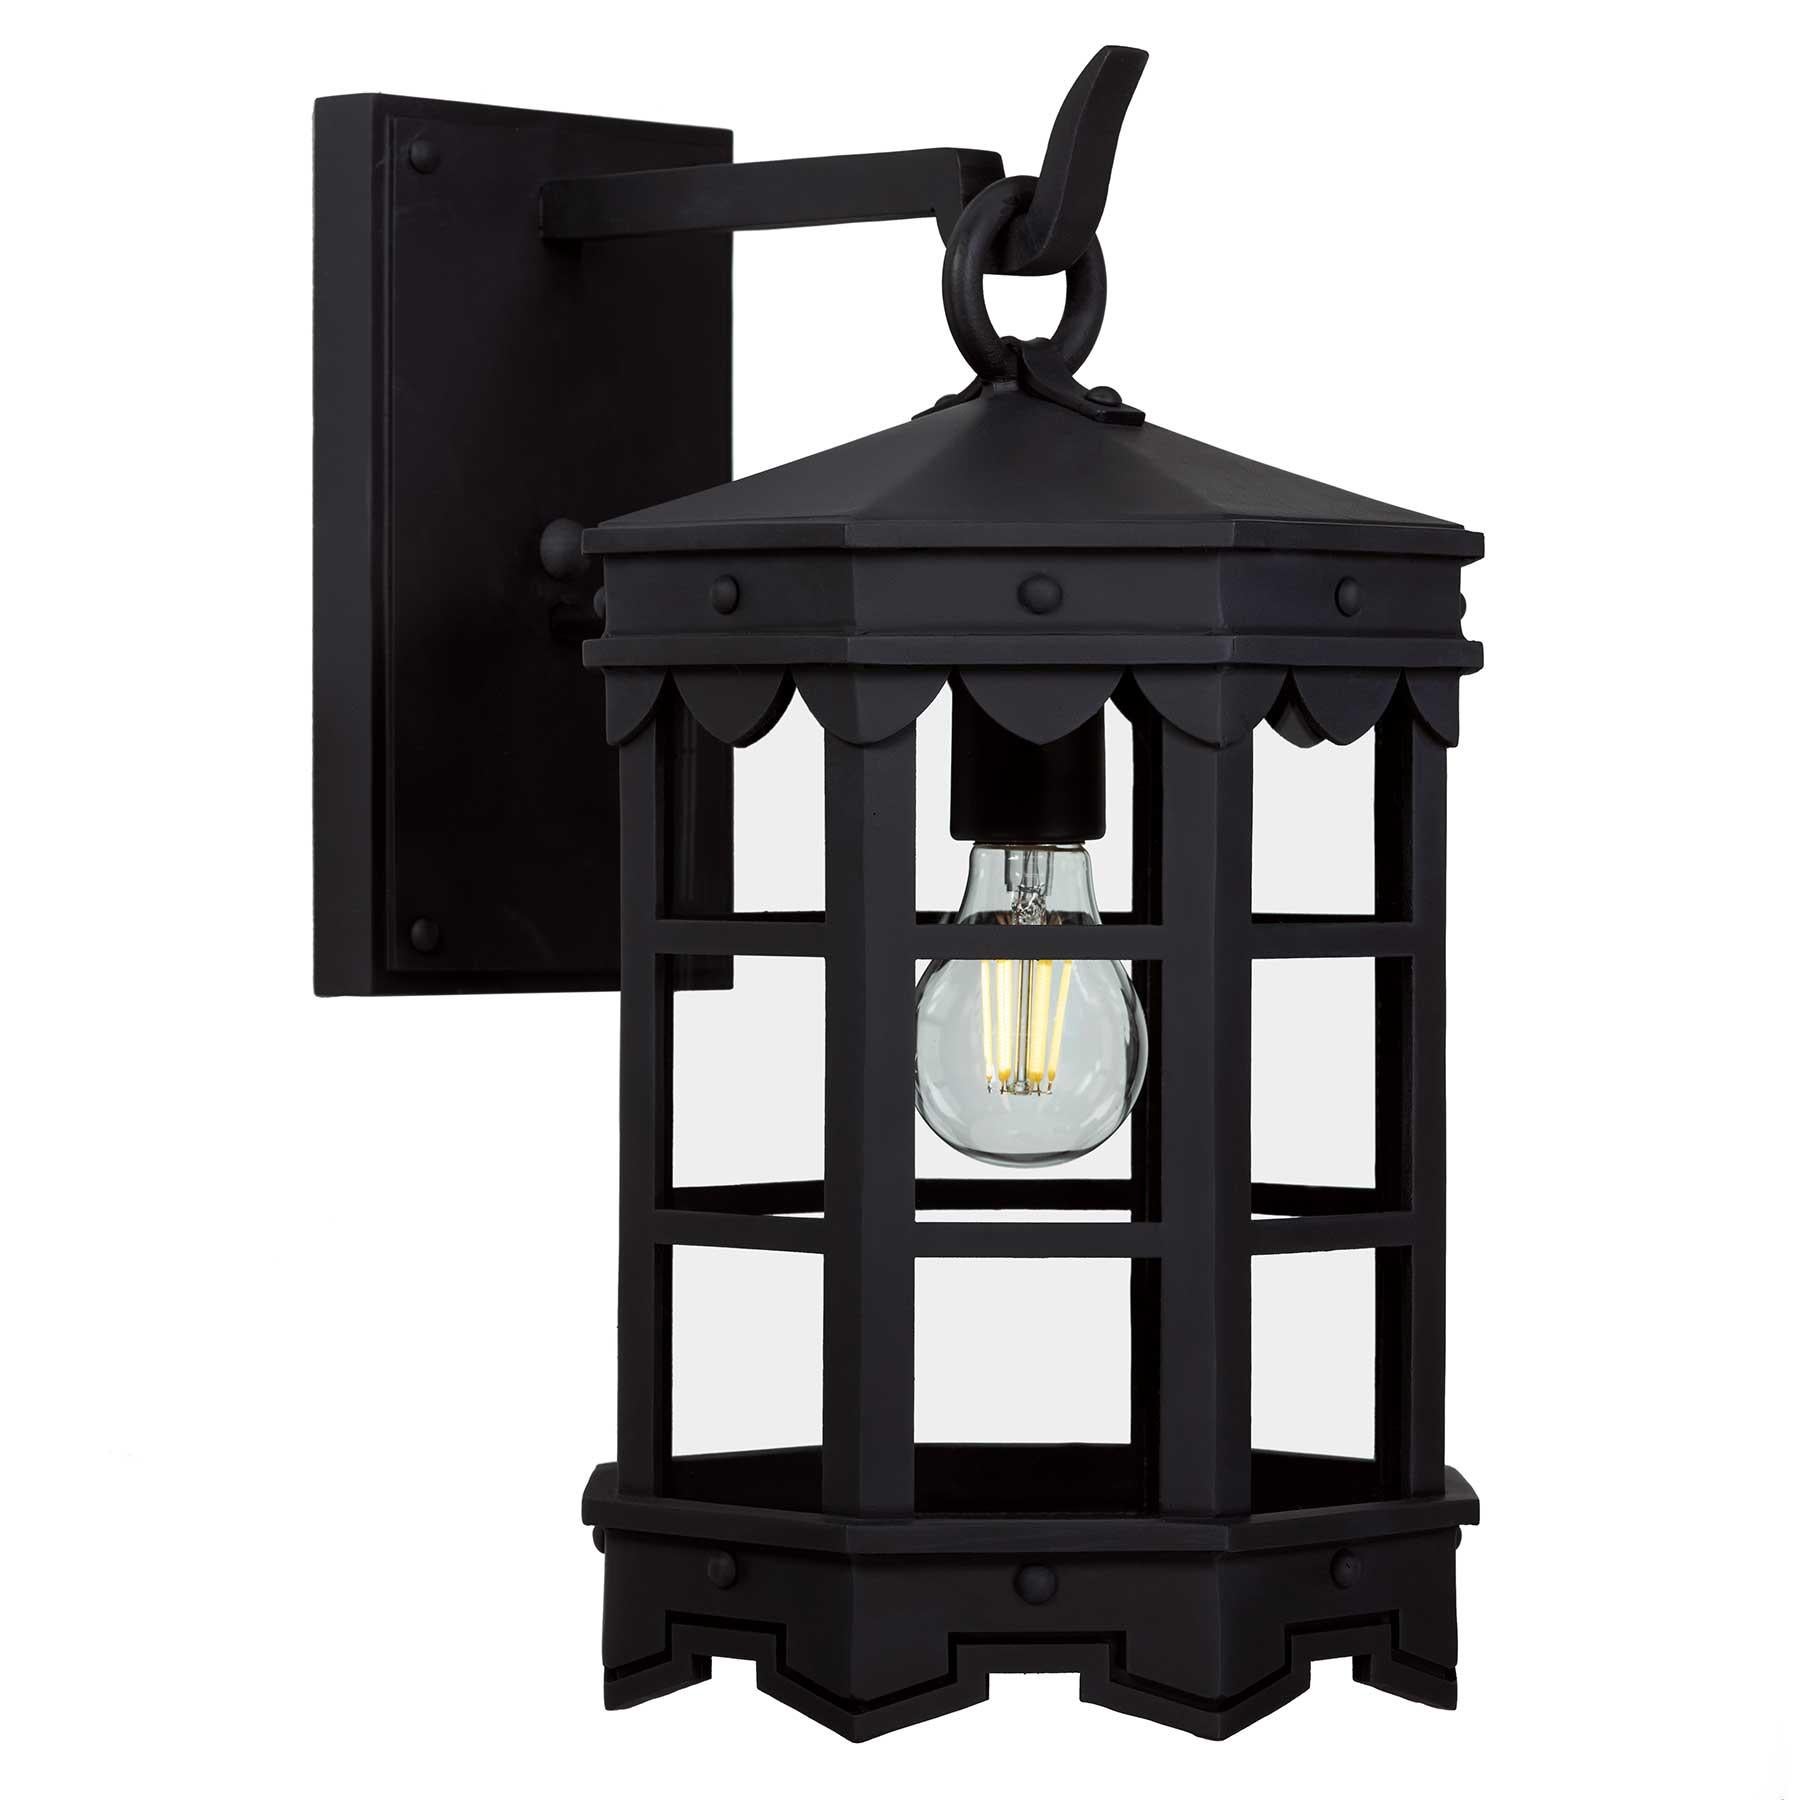 Spanish Colonial Mediterranean Handmade Wrought Iron Exterior Lantern Wall Light, Black Finish  For Sale